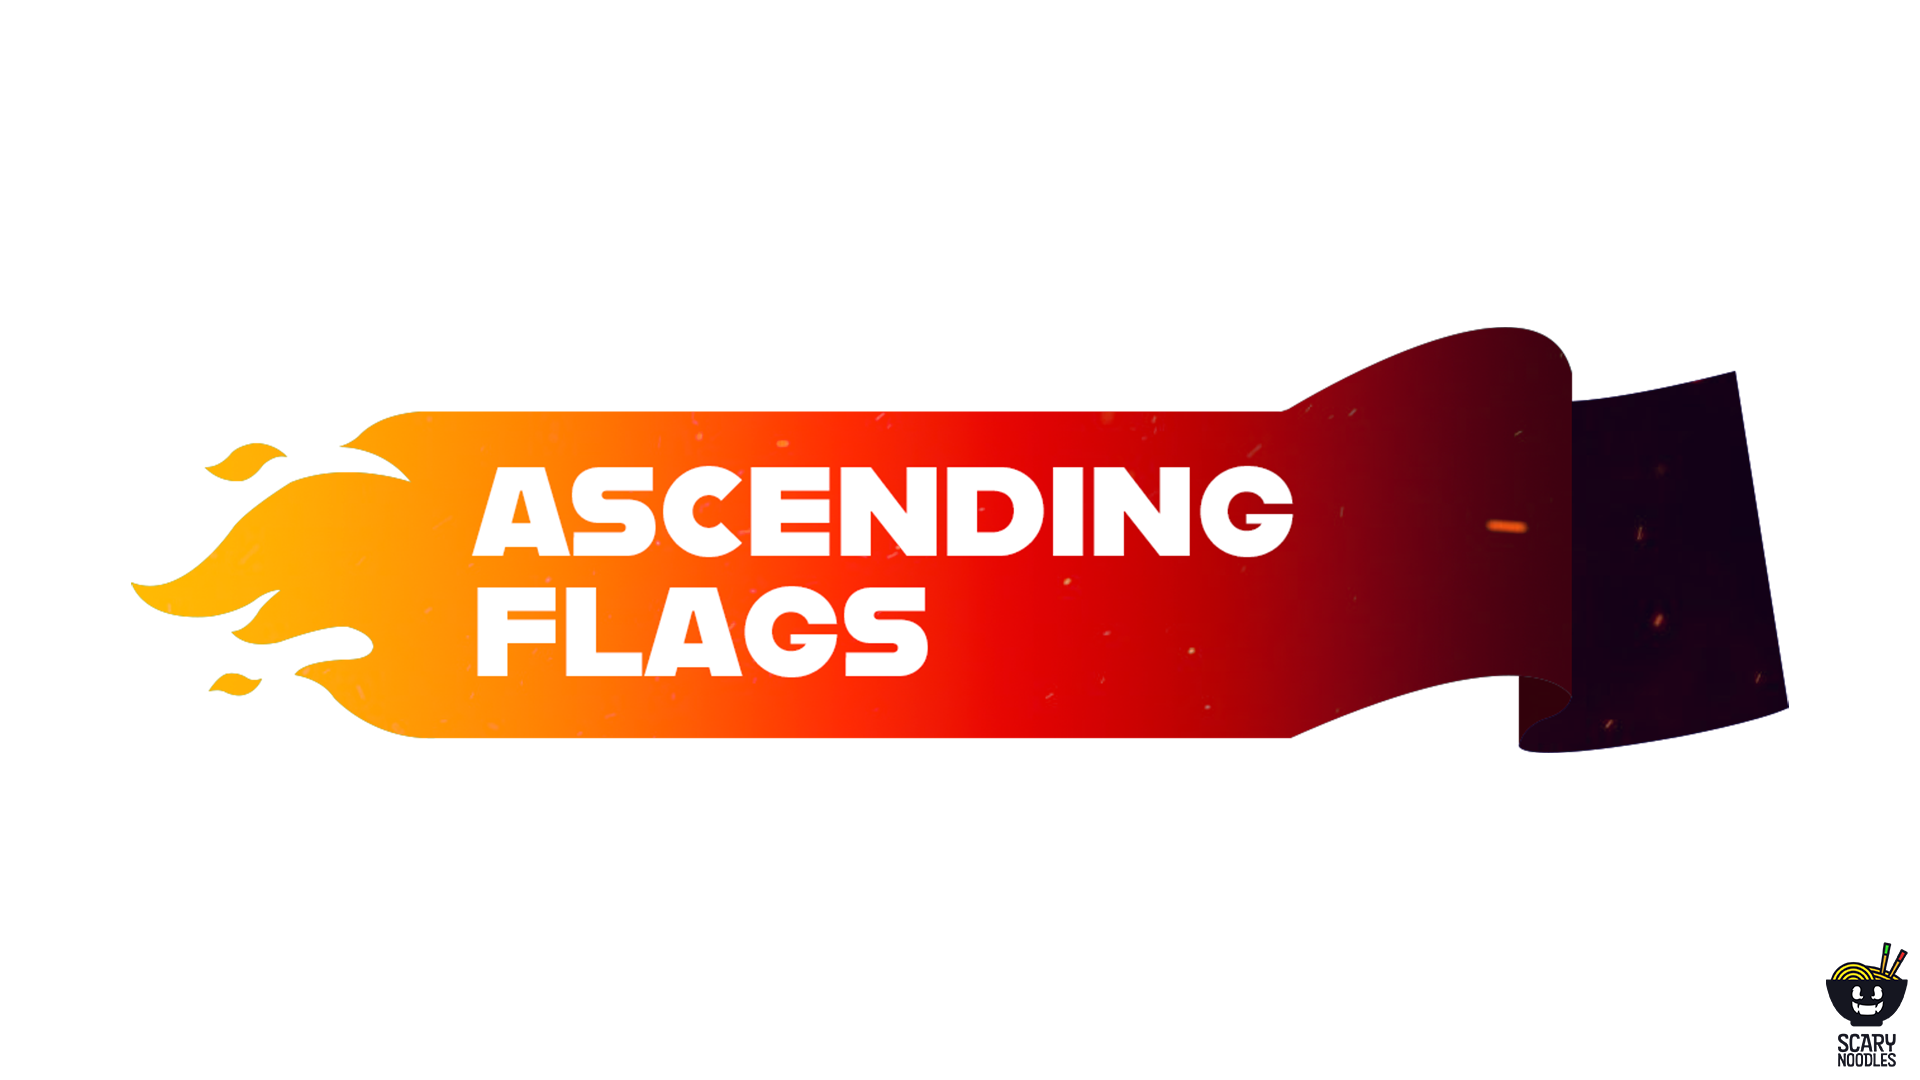 Ascending Flags